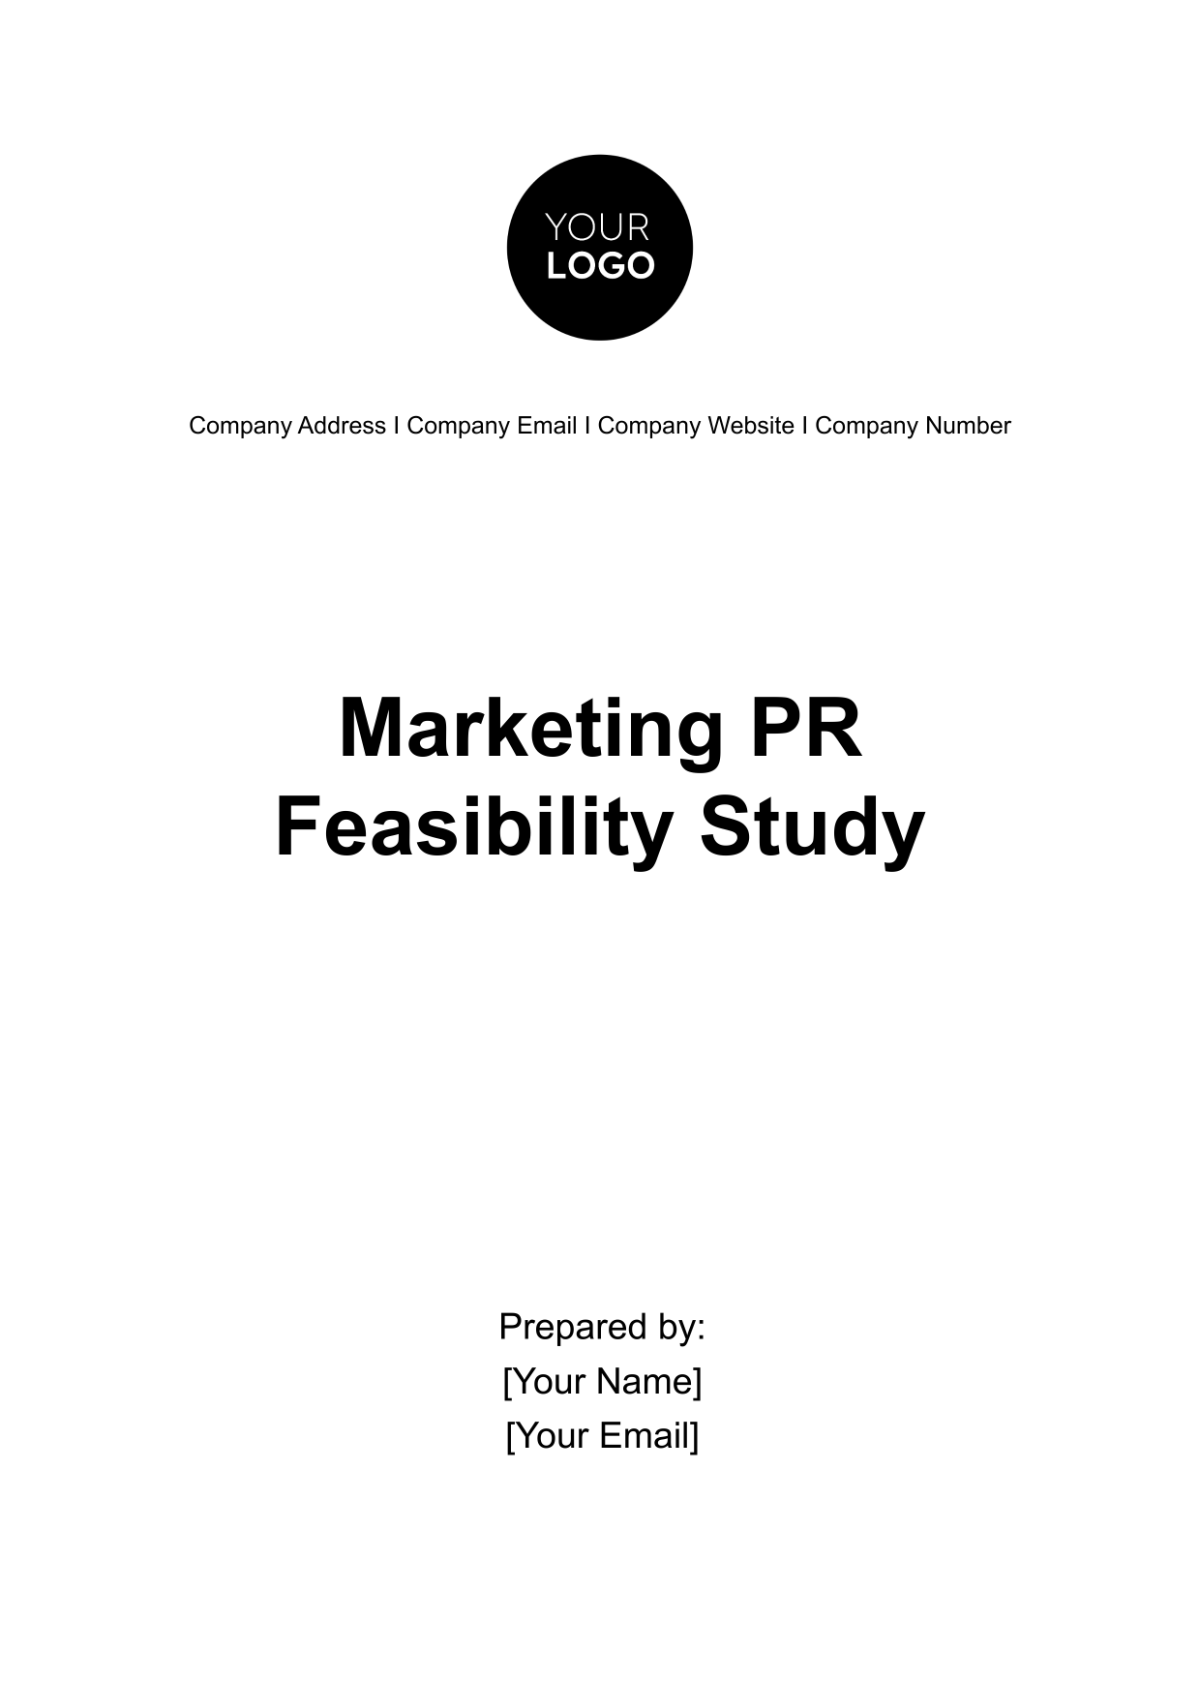 Marketing PR Feasibility Study Template